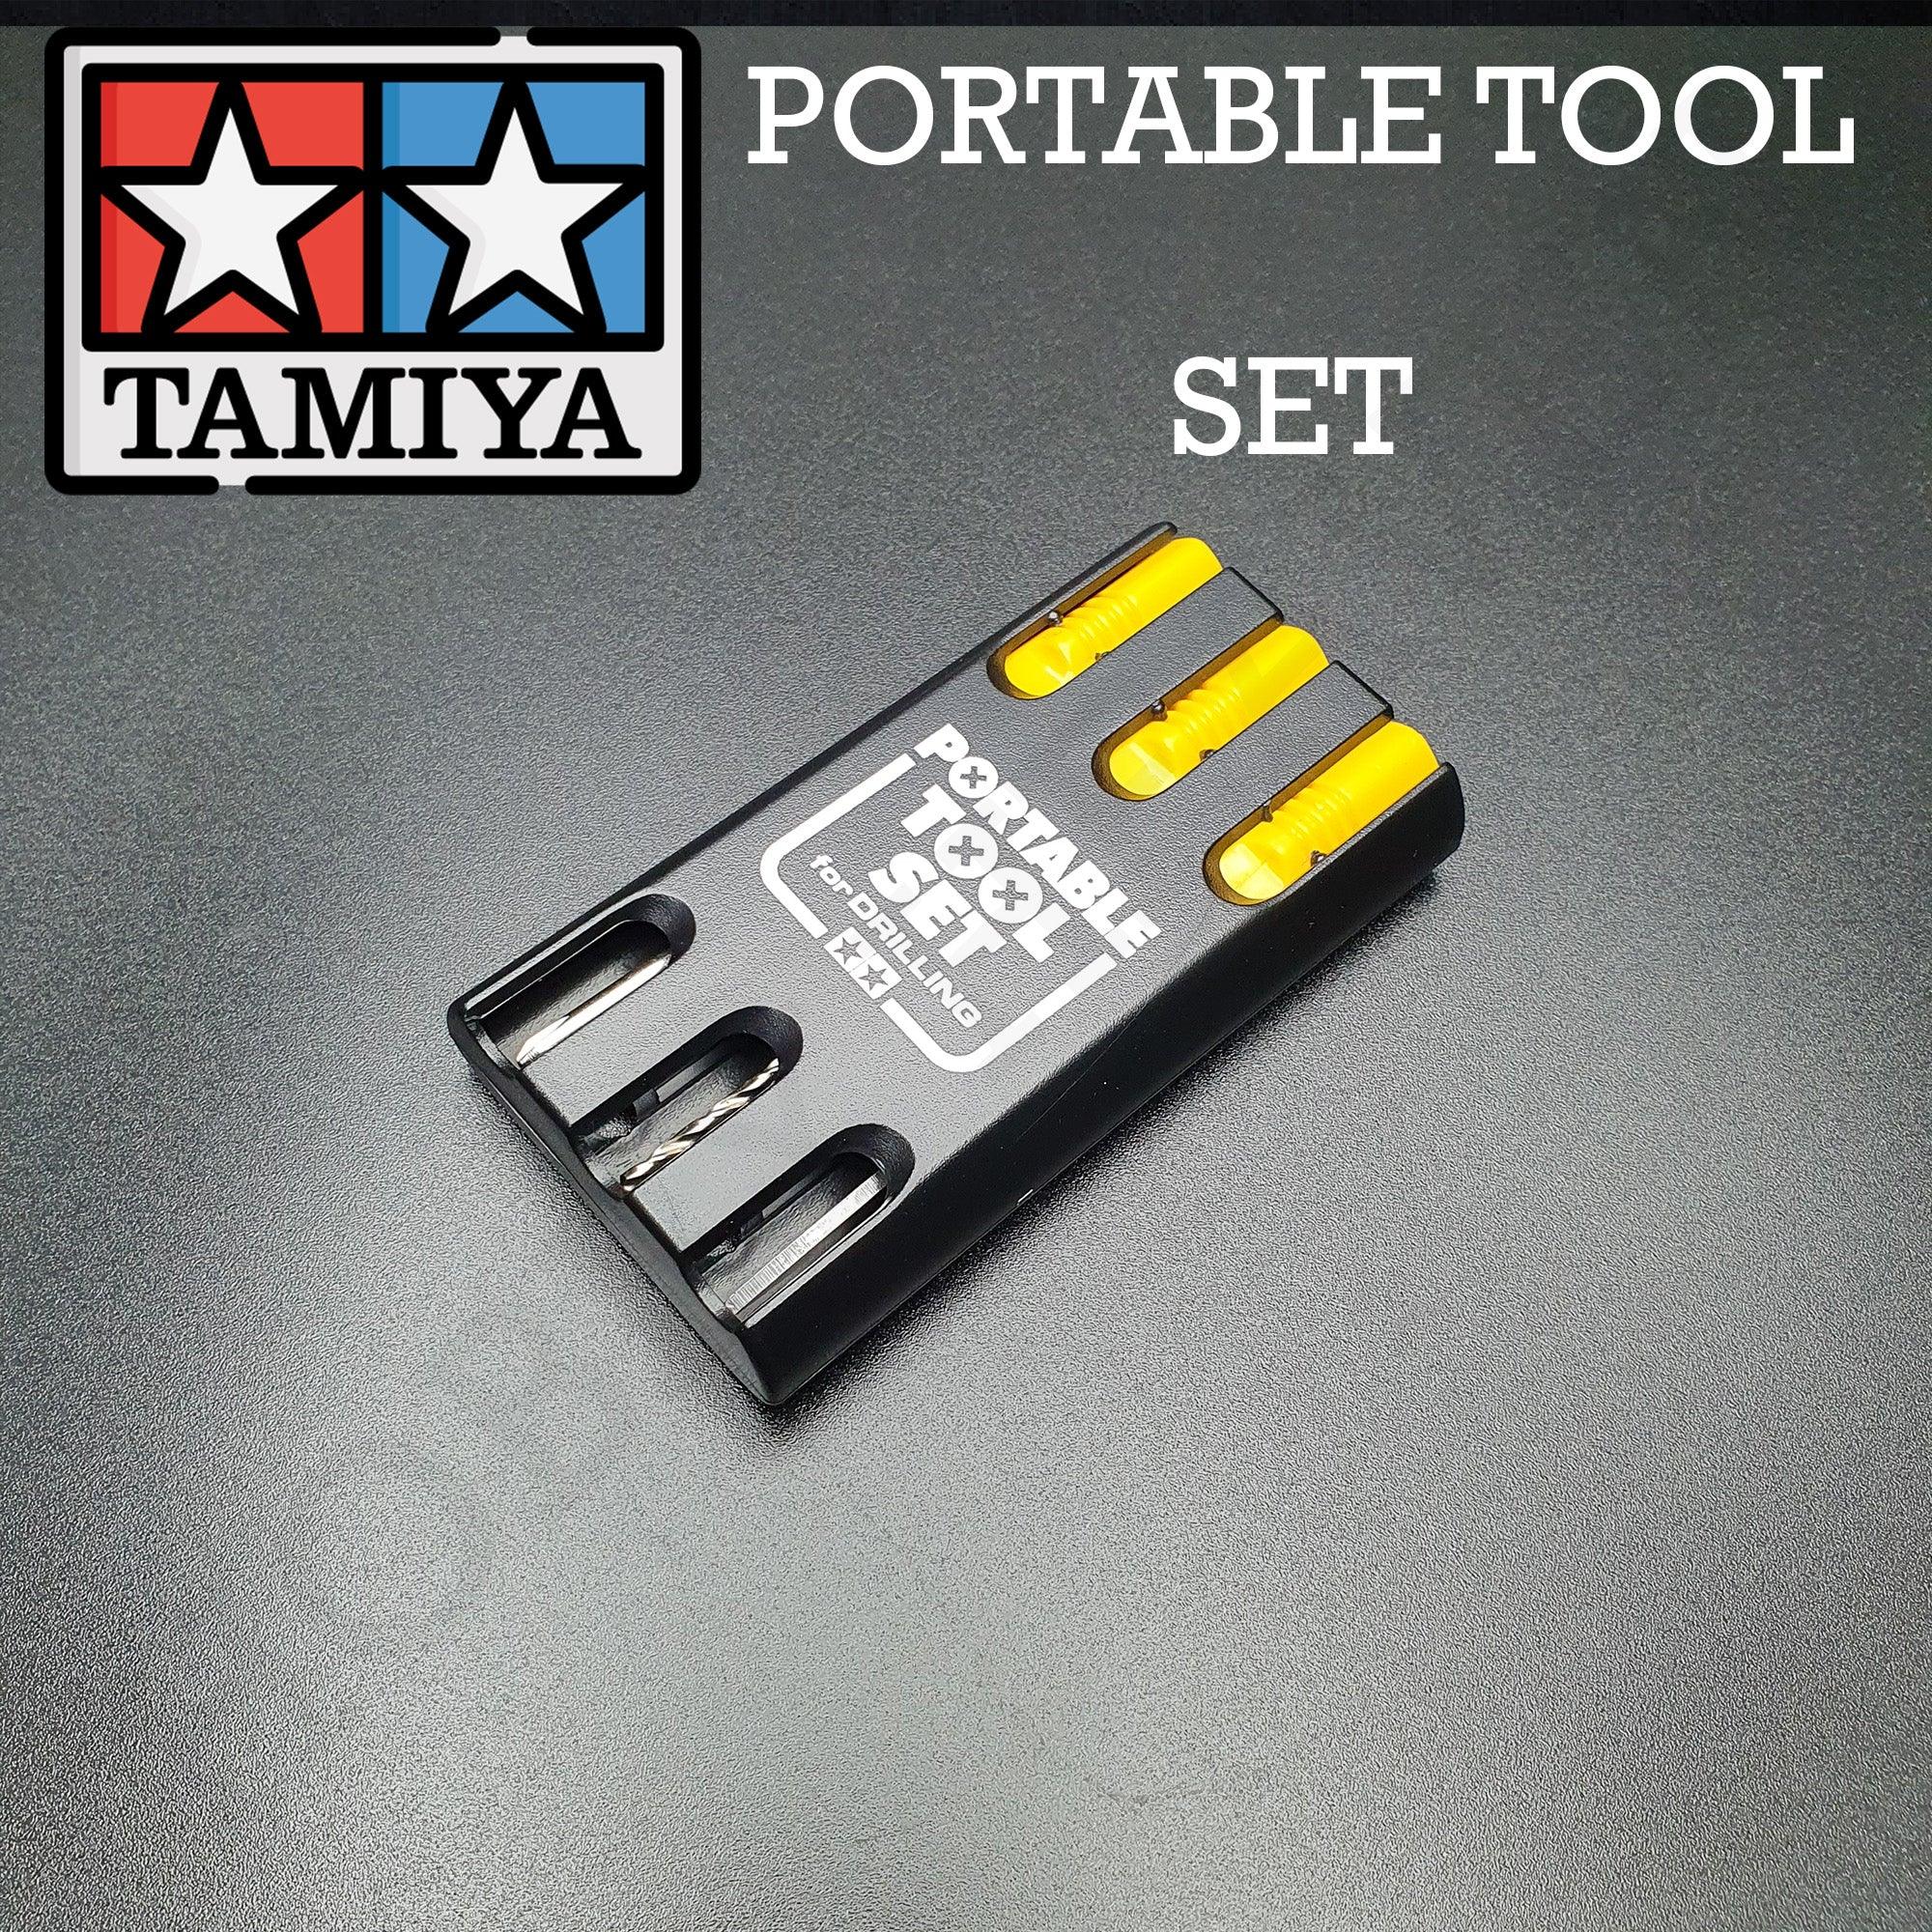 Tamiya Portable Tool Set for Drilling